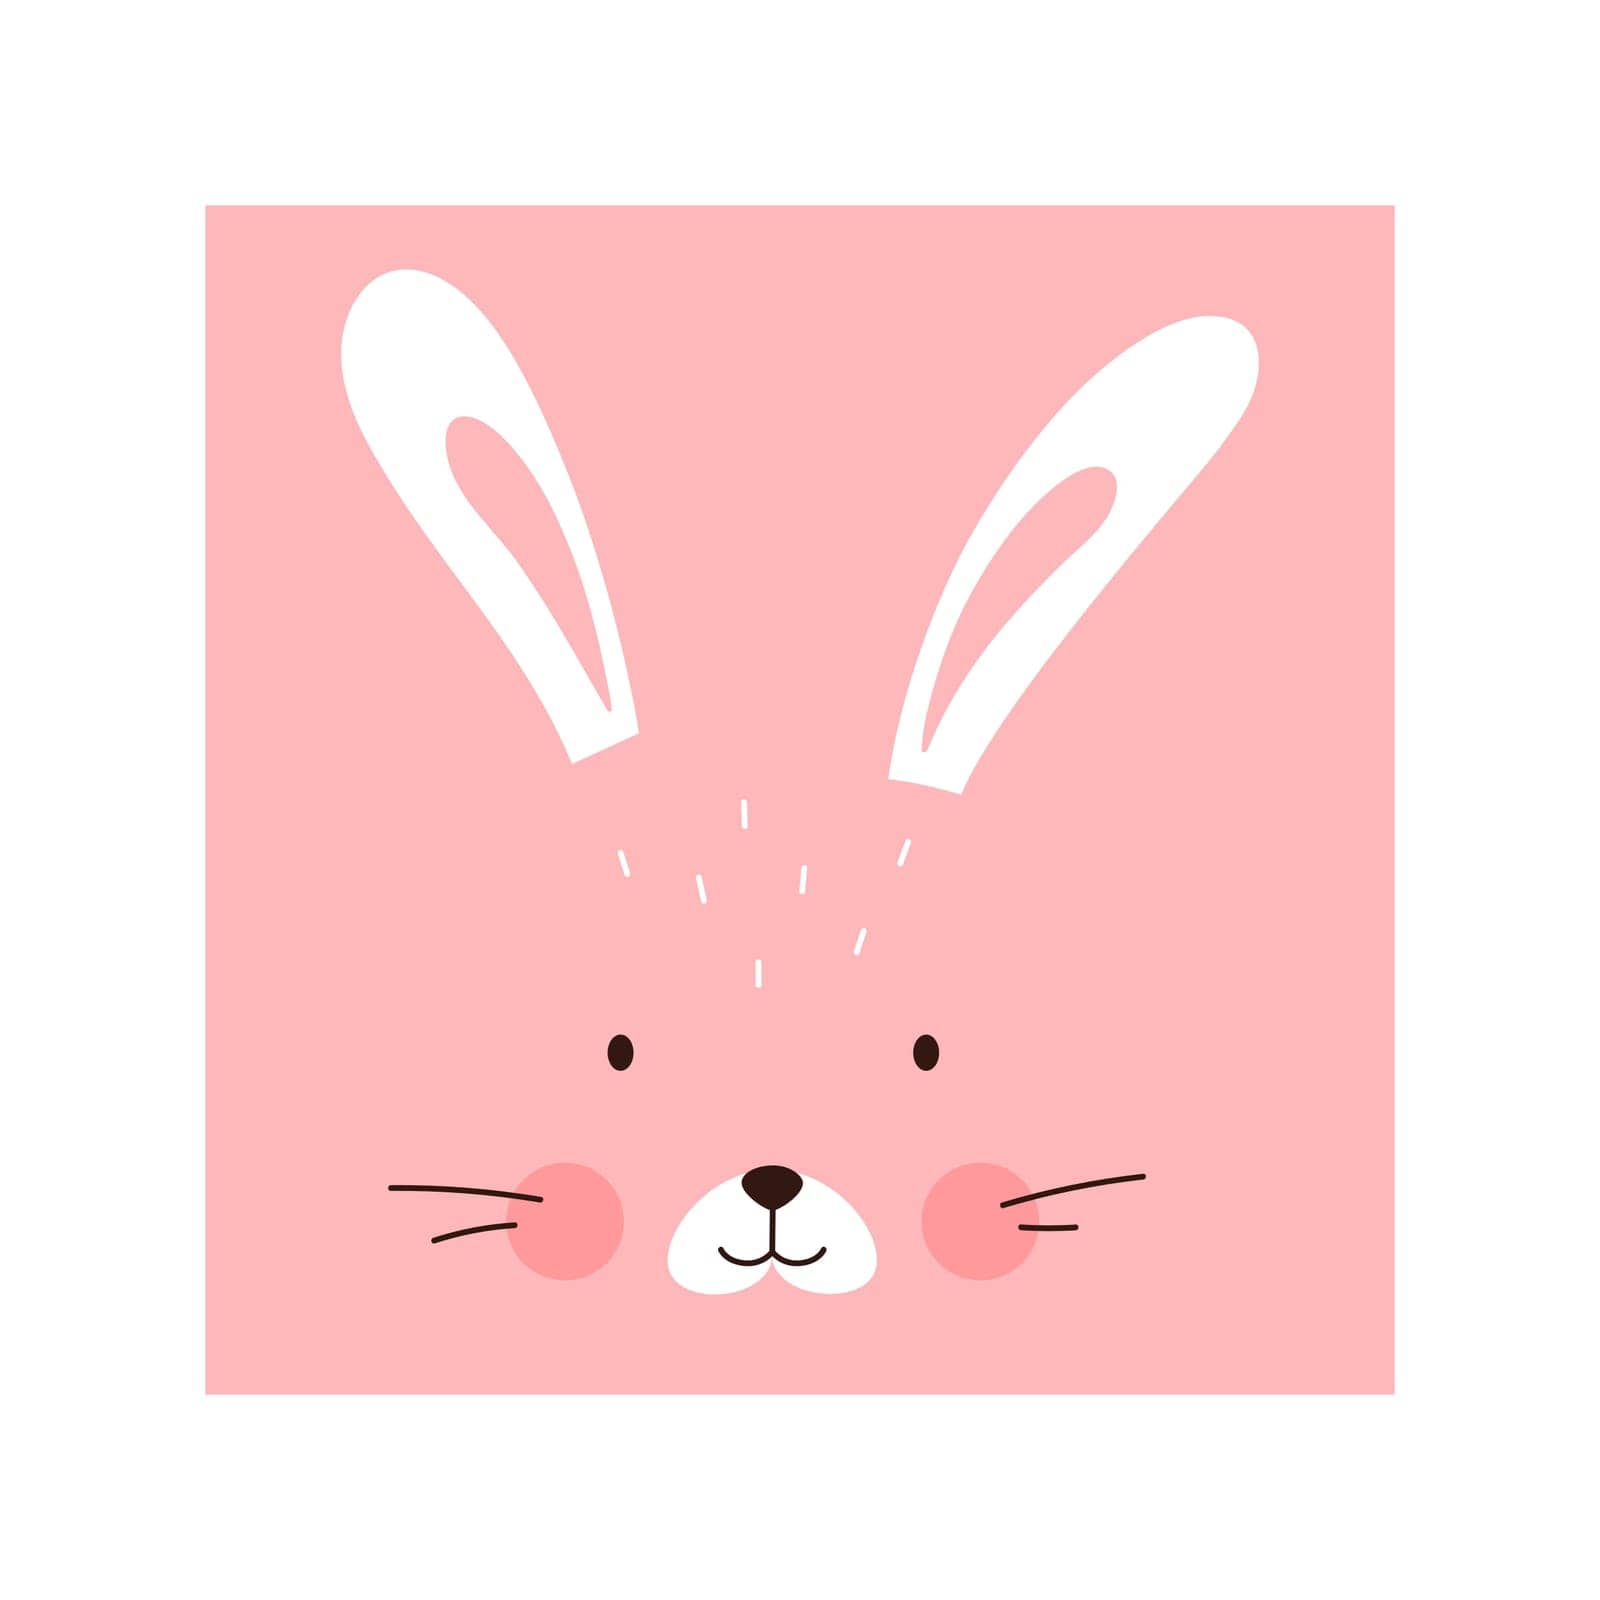 Simple bunny portrait by Popov